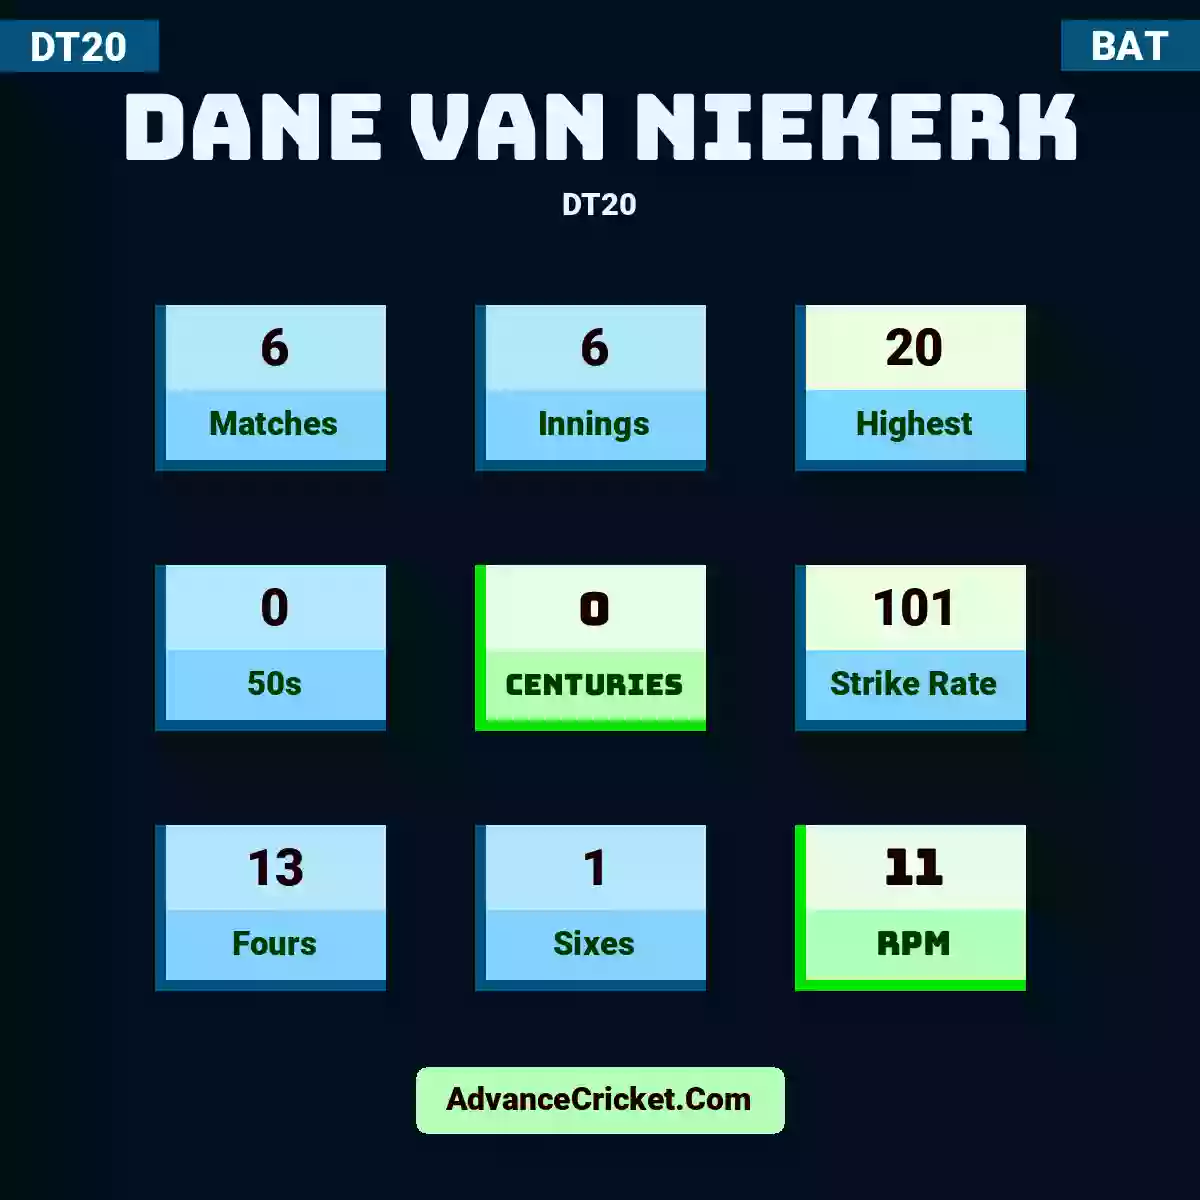 Dane van Niekerk DT20 , Dane van Niekerk played 6 matches, scored 20 runs as highest, 0 half-centuries, and 0 centuries, with a strike rate of 101. D.Niekerk hit 13 fours and 1 sixes, with an RPM of 11.